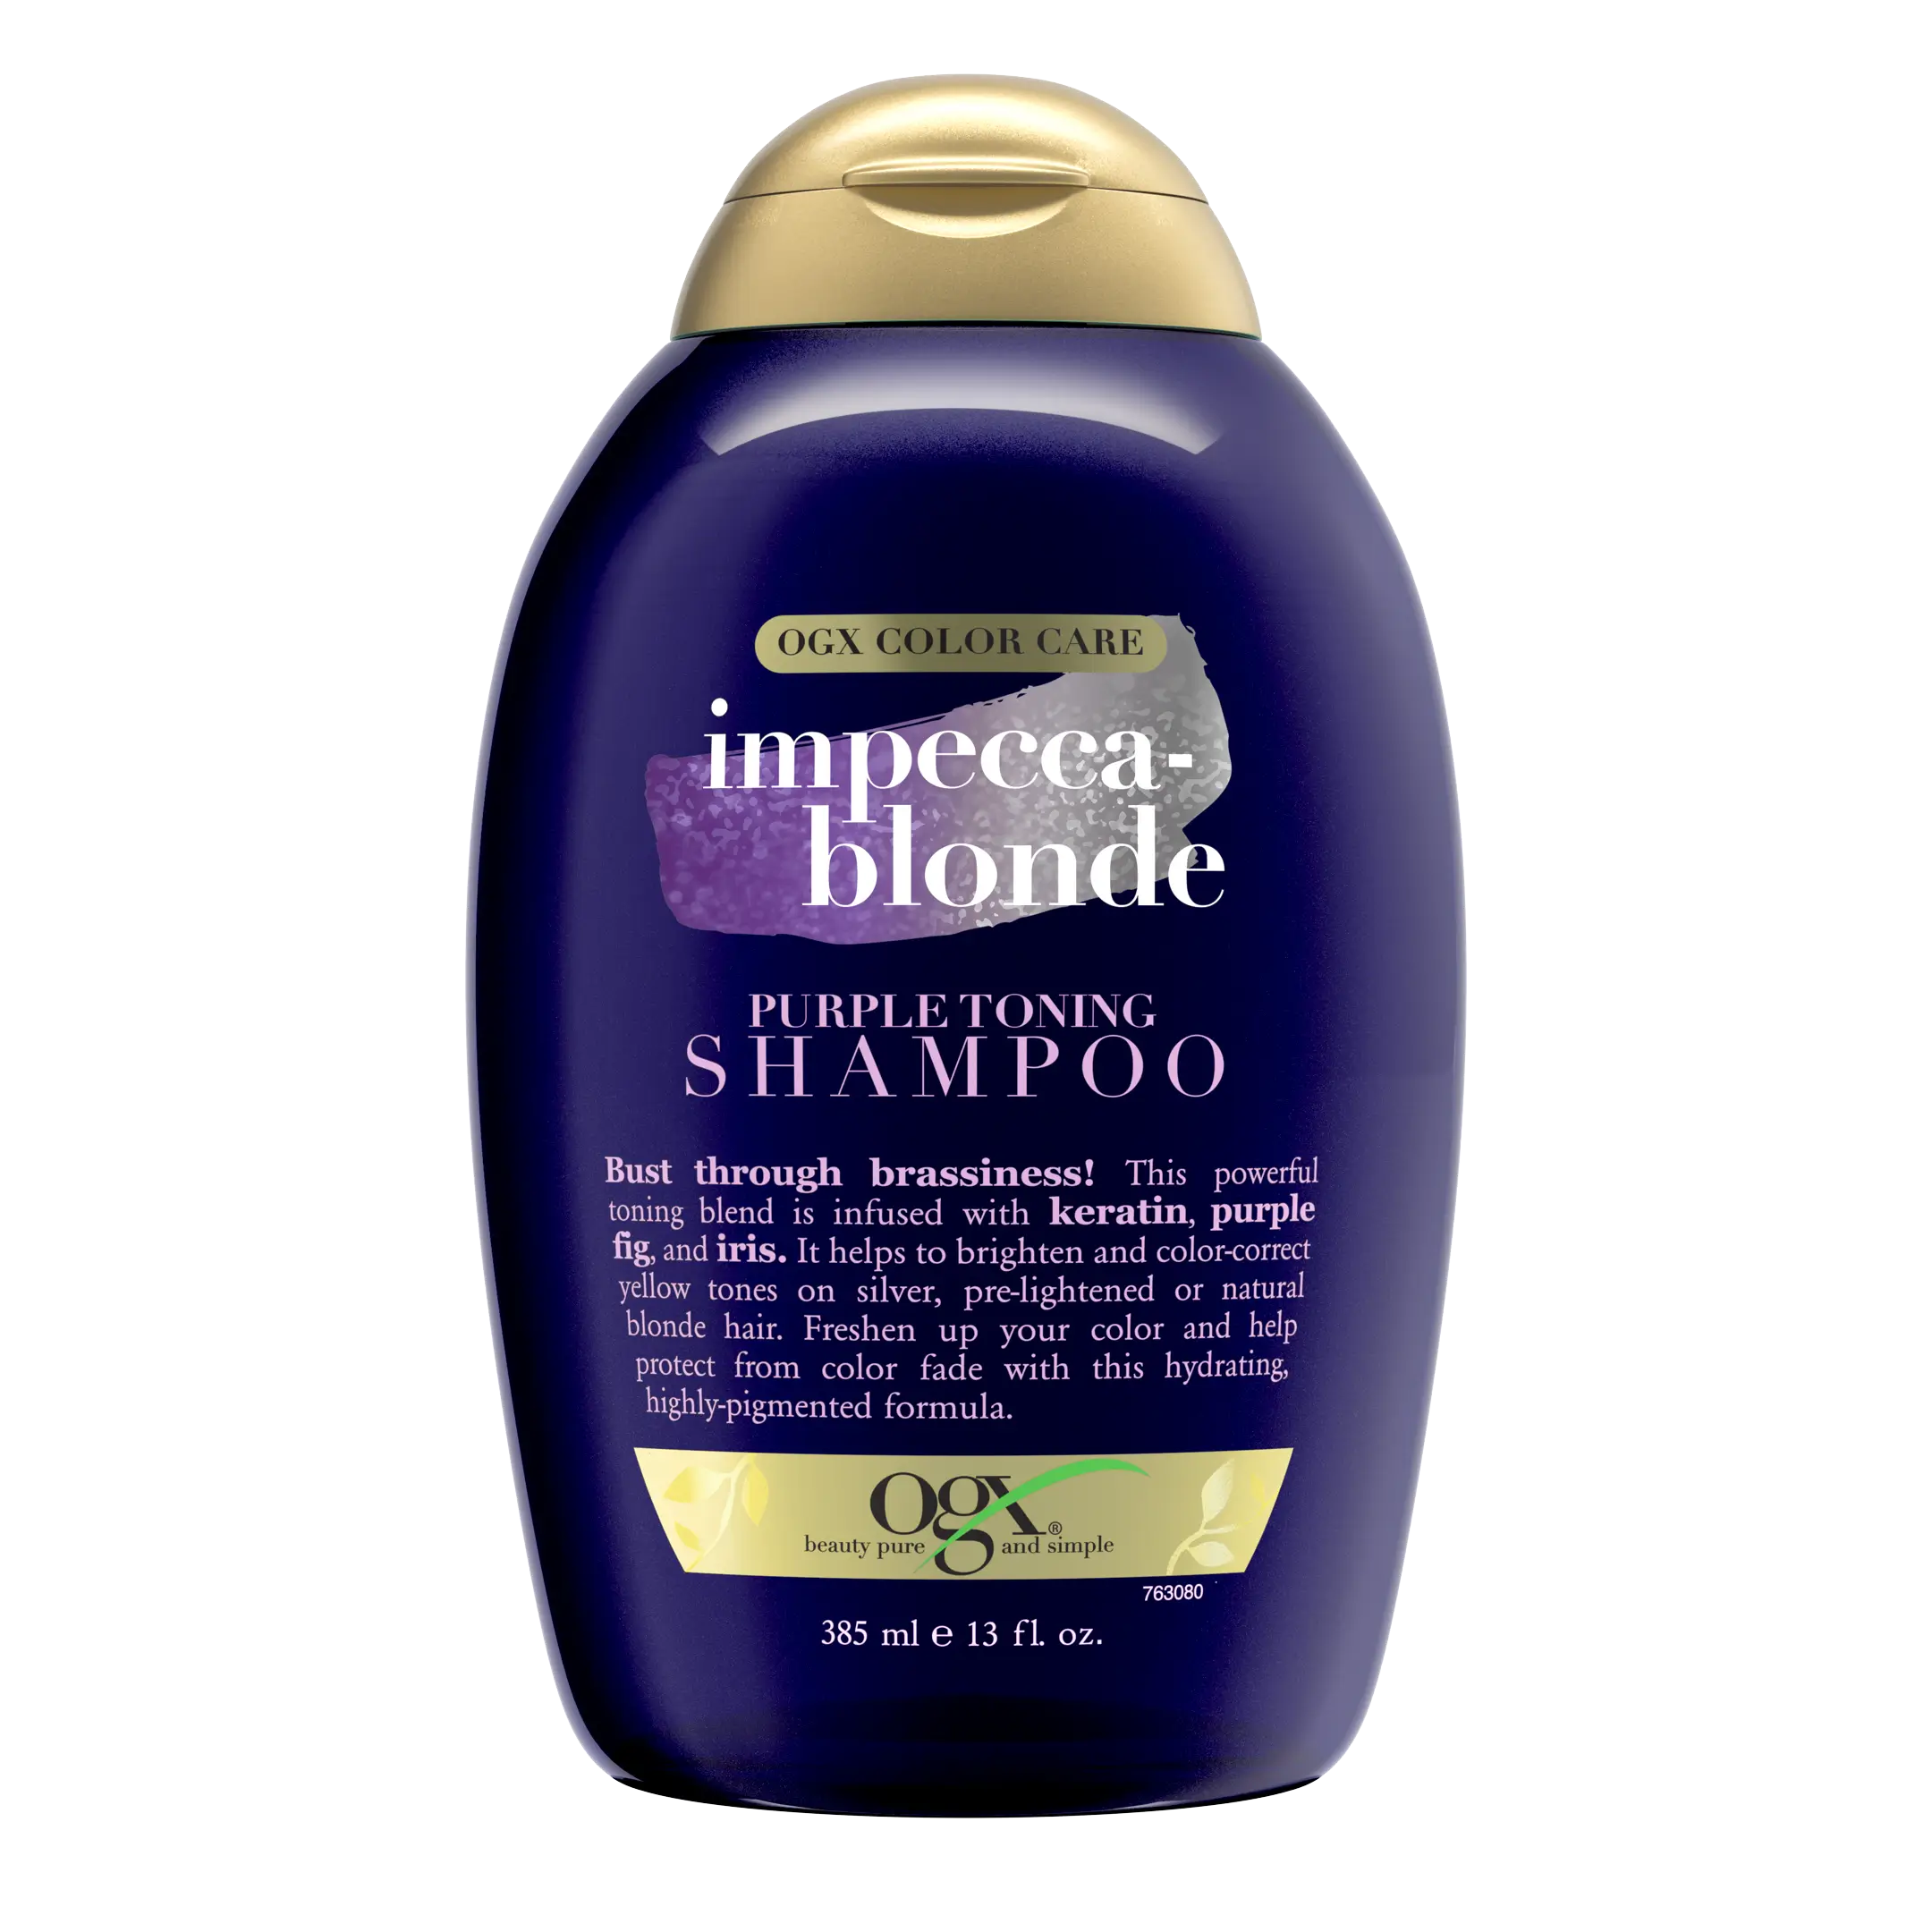 Impecca-Blonde Purple Toning Shampoo 13oz